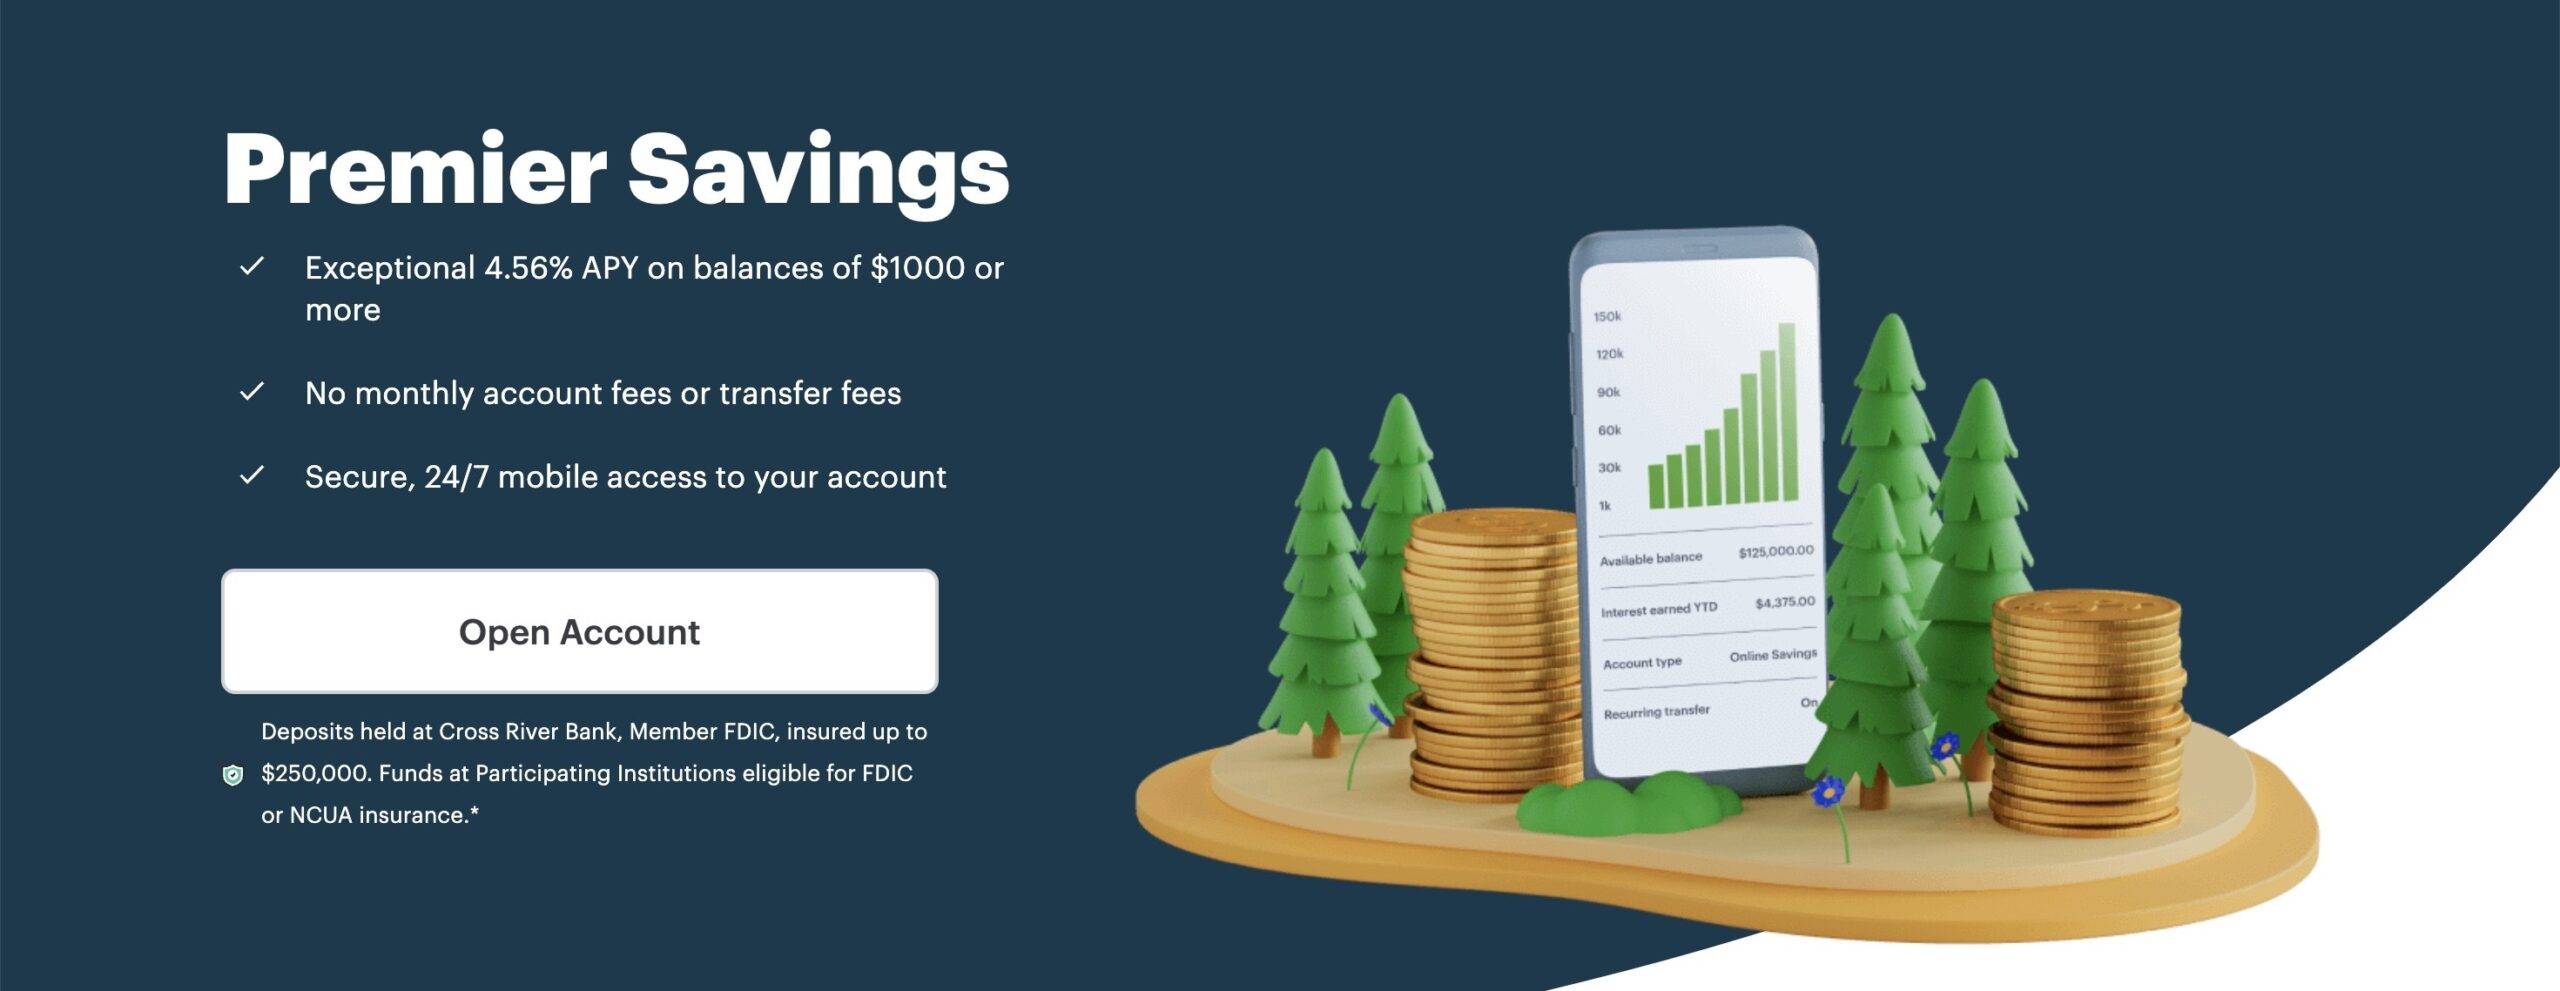 Upgrade Premier Savings Account Hero Image